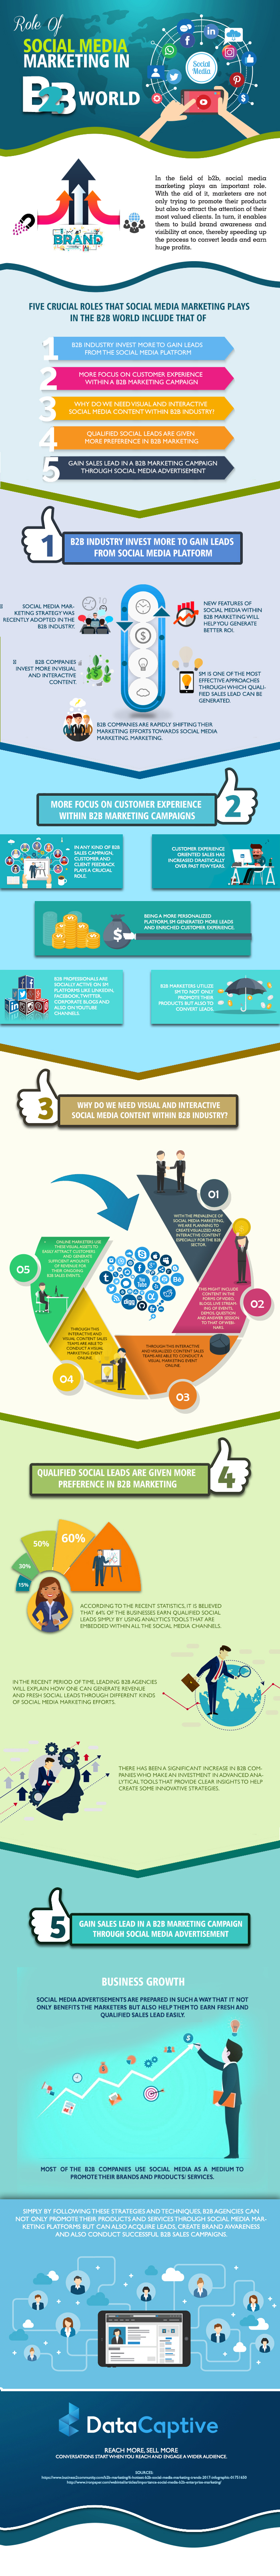 Social media marketing in B2B world Infographic